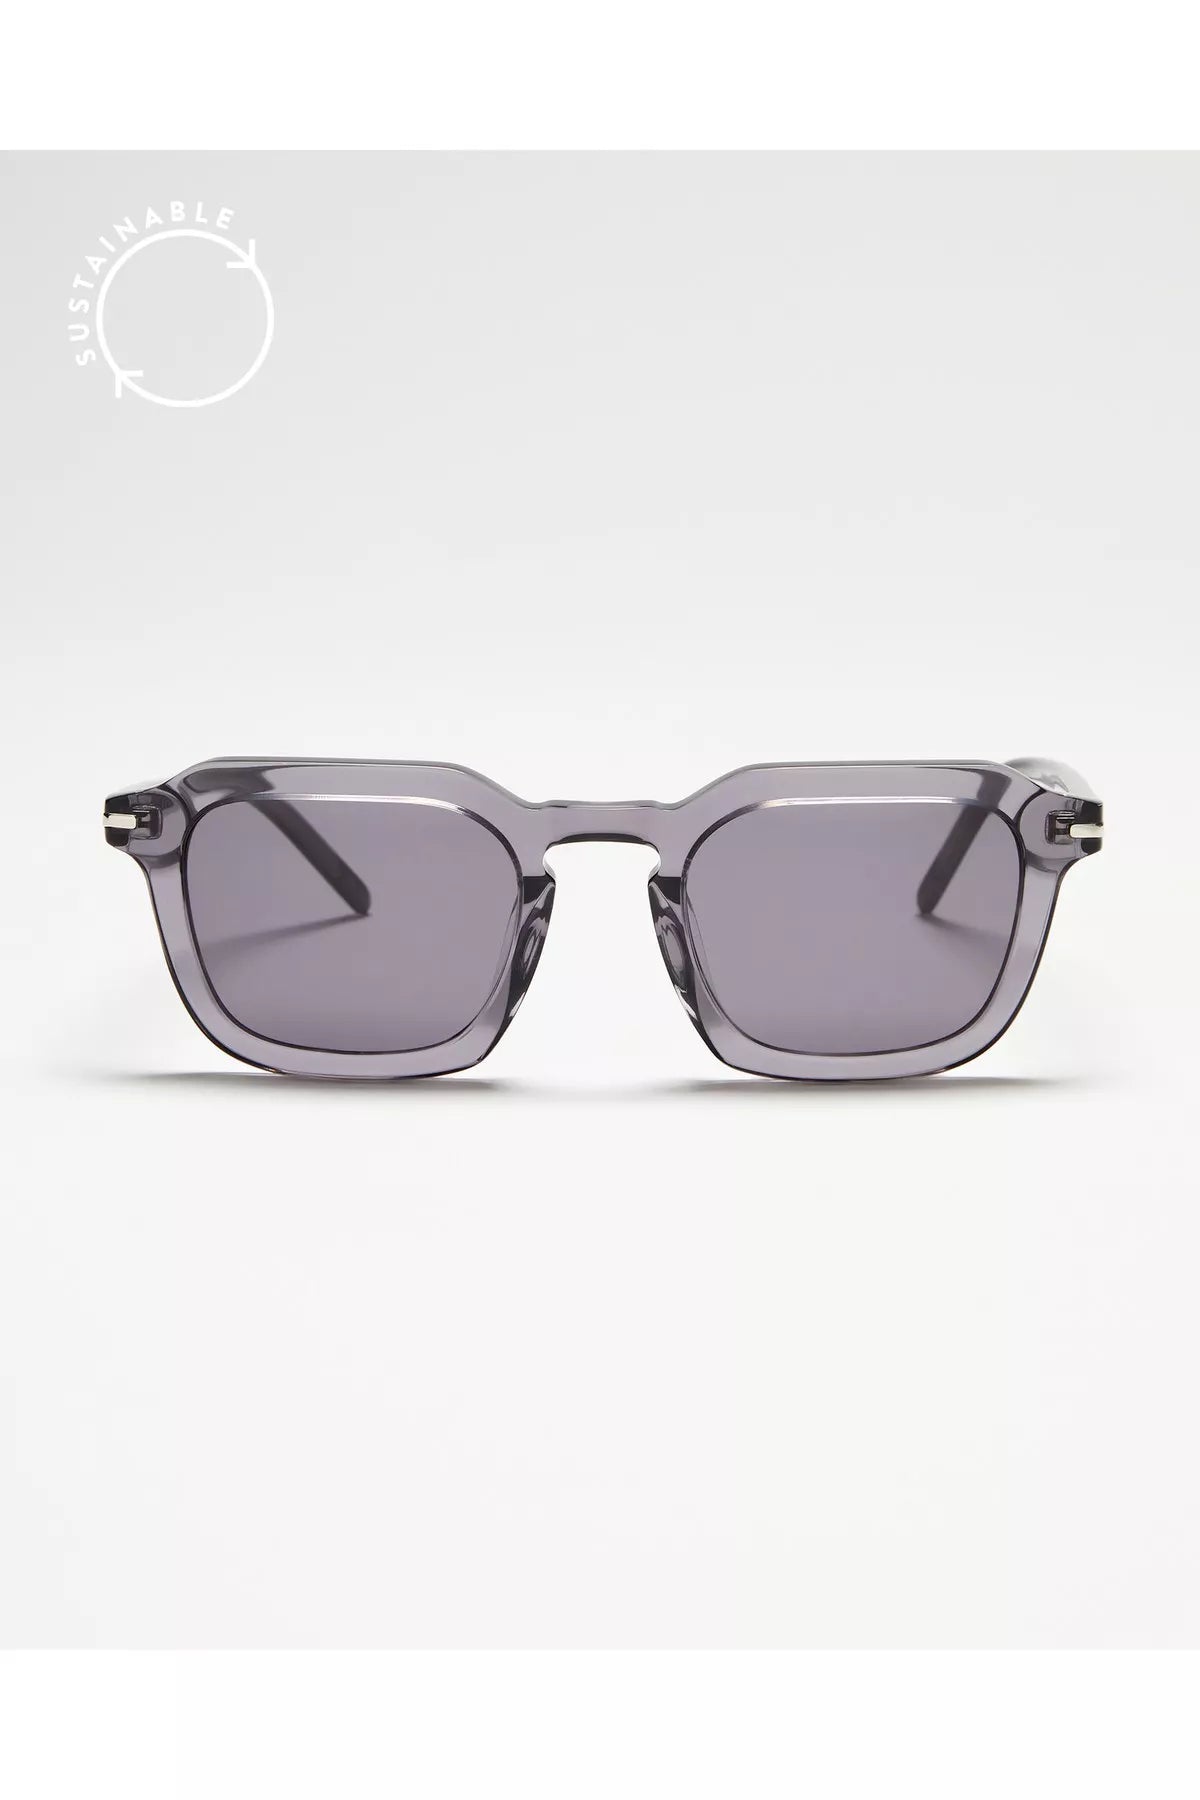 The Max Sunglasses - Mineral Grey